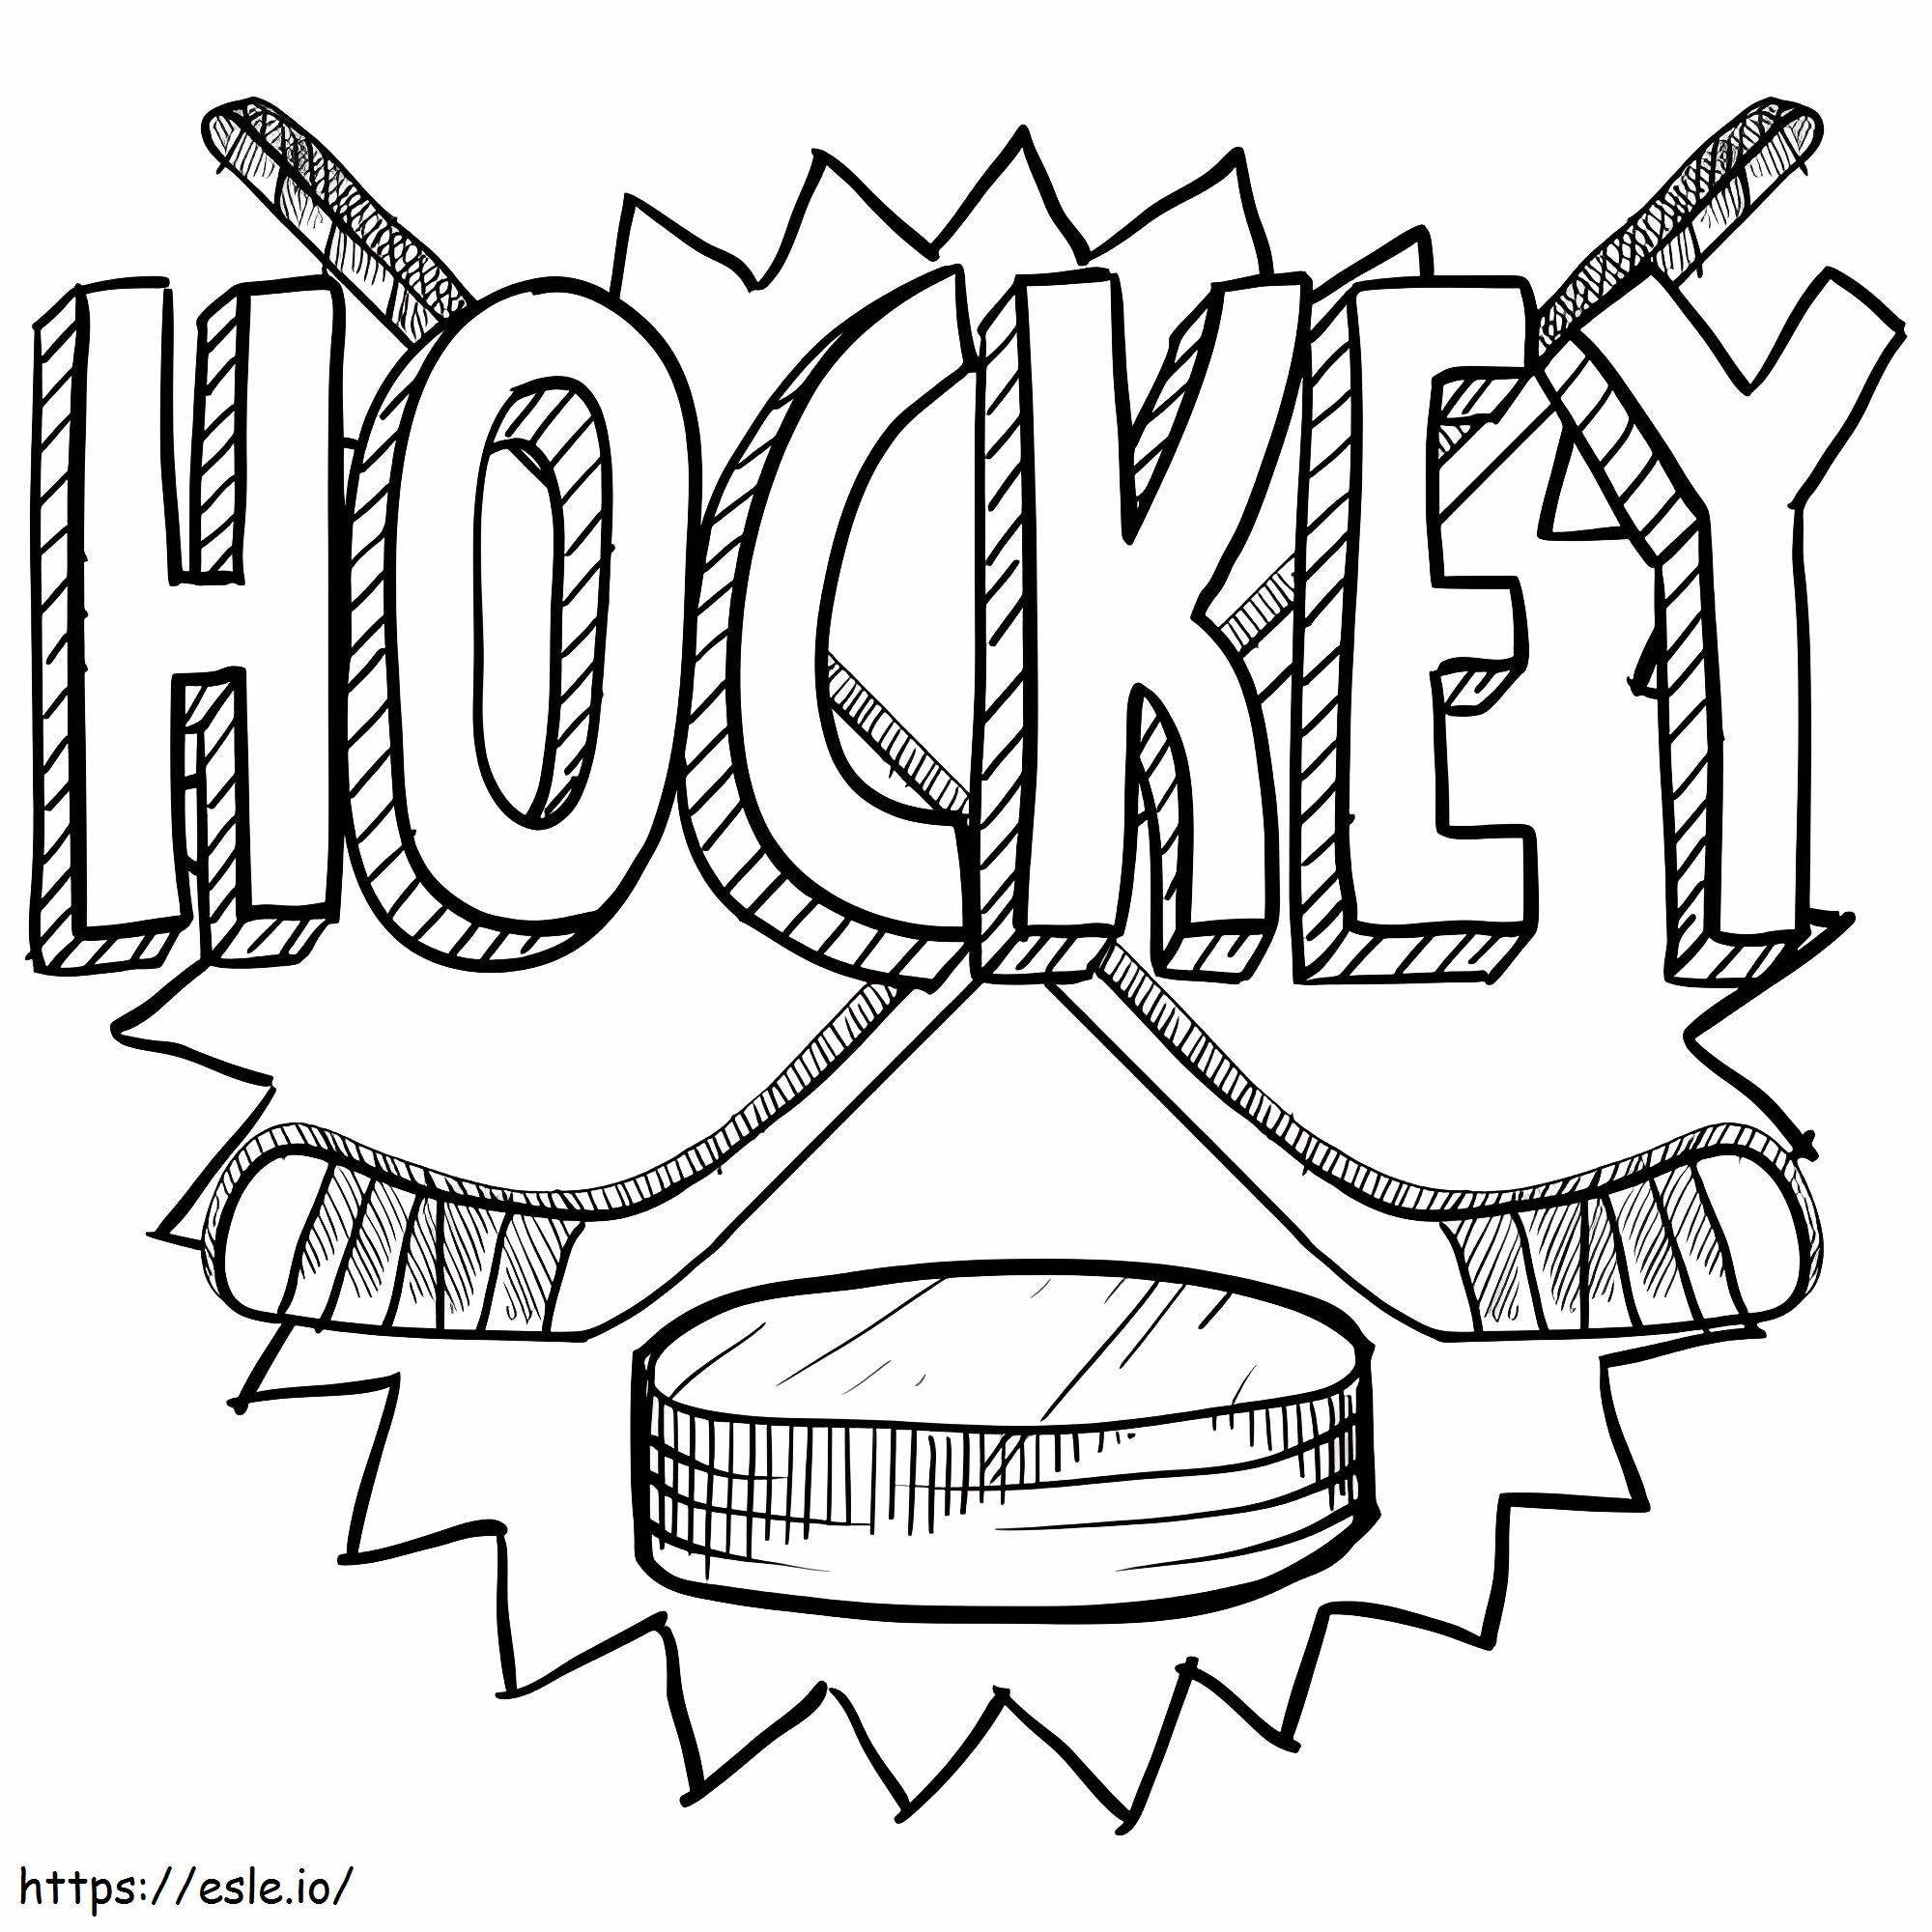 Logo hokeja kolorowanka